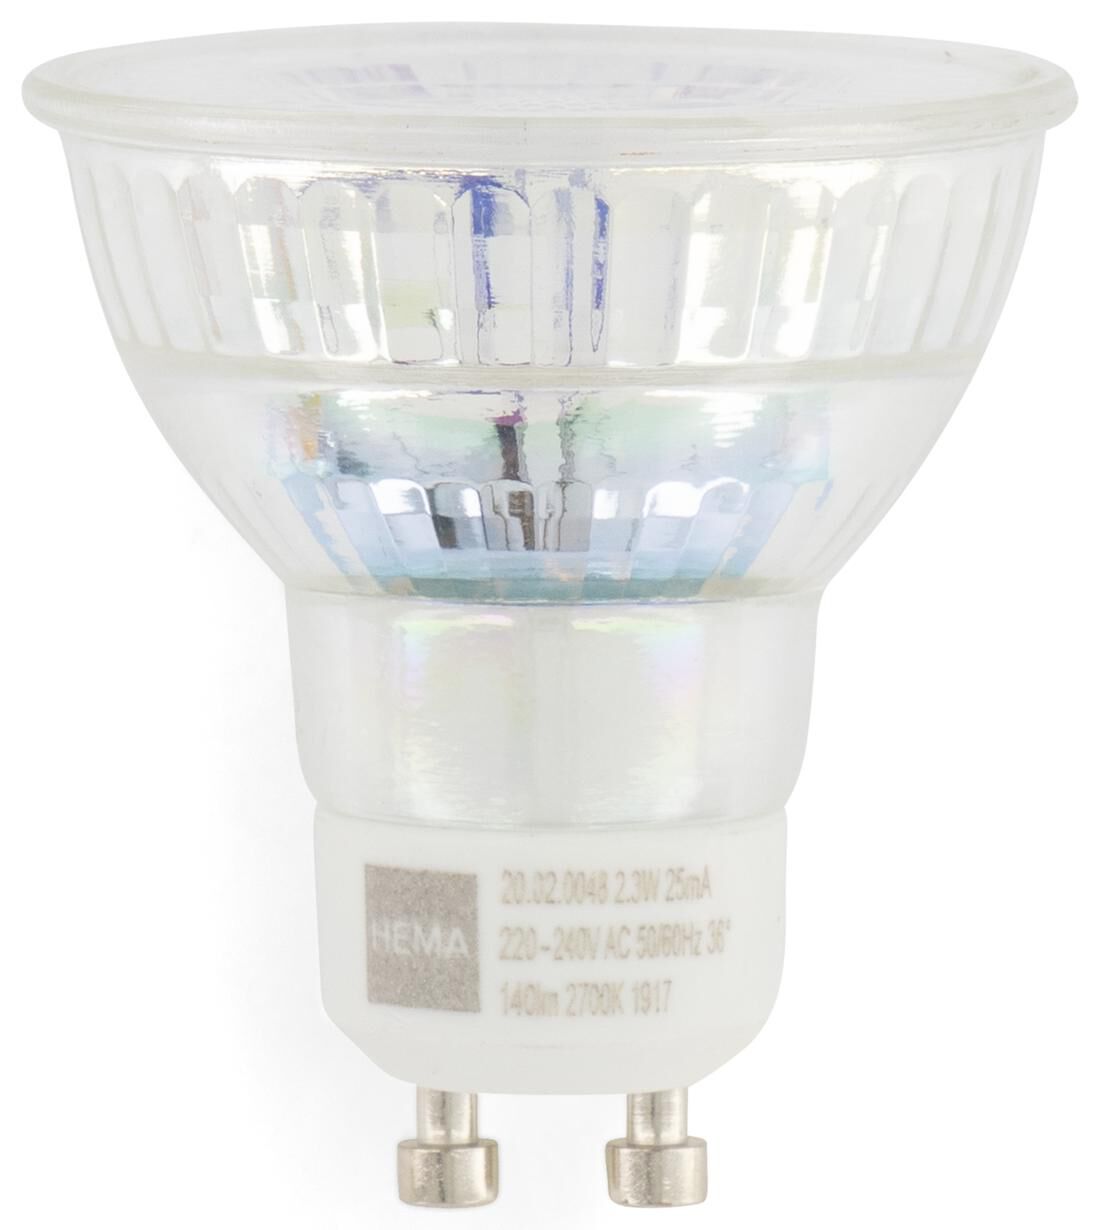 Lamp 25W - 140 Lm - Spot - Helder (transparant) ... - Makeover.nl